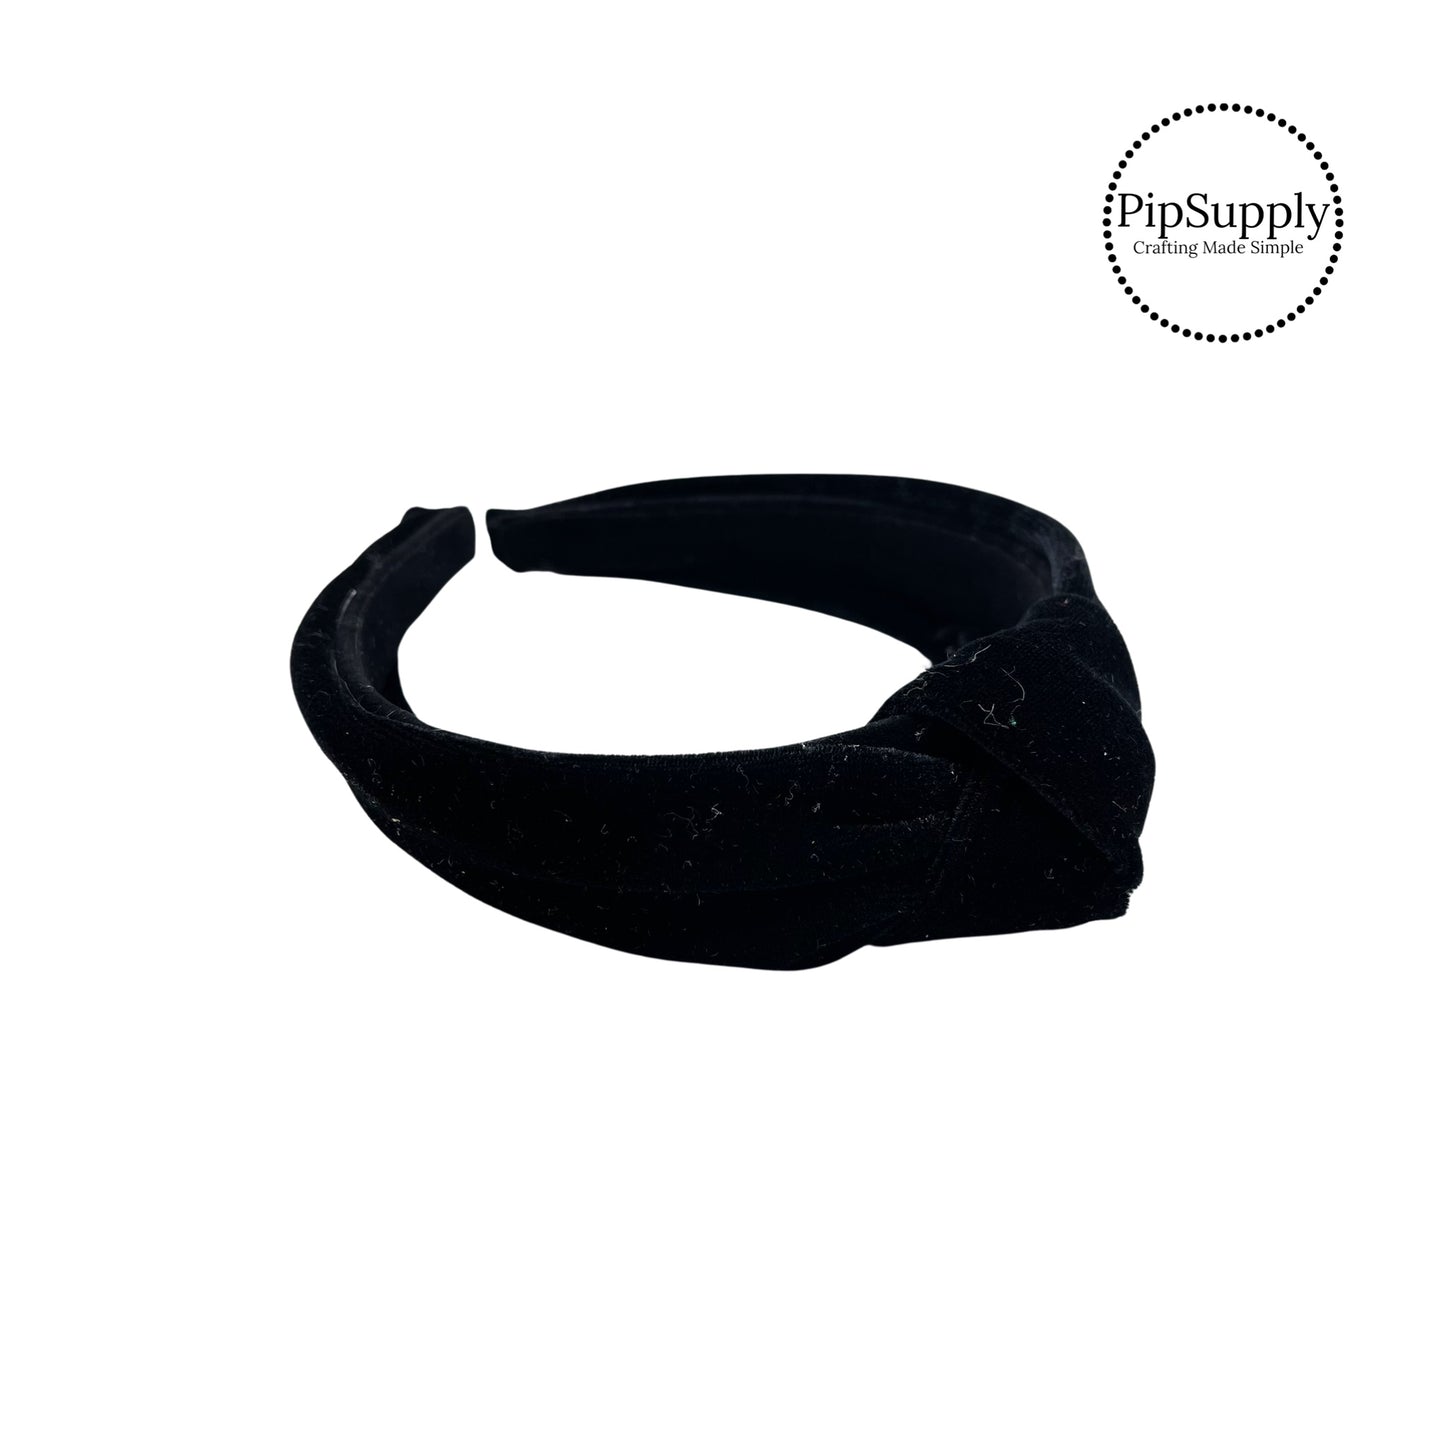 Solid black velvet knotted headband